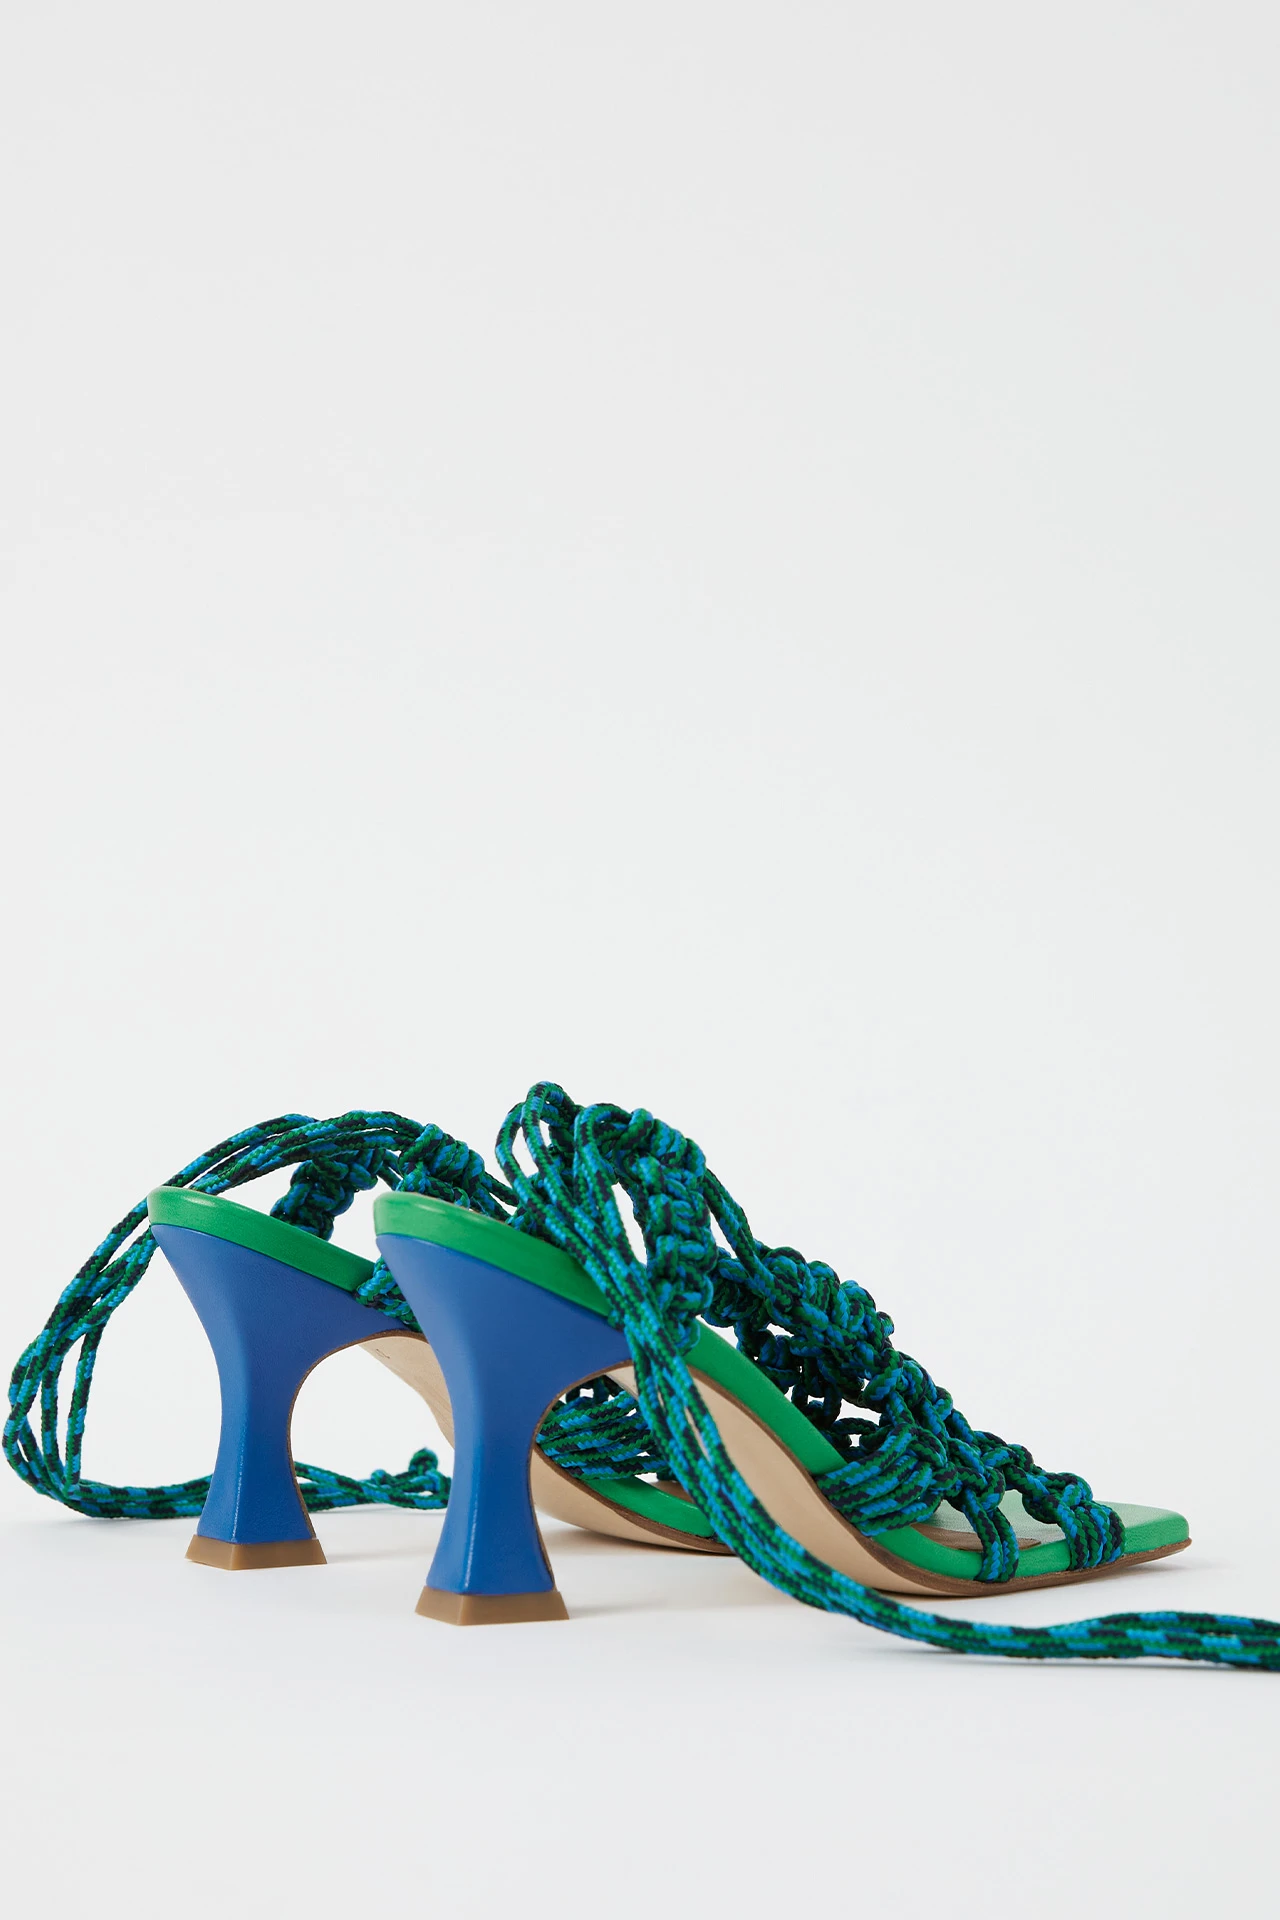 Miista-stephanie-blue-sandals-02